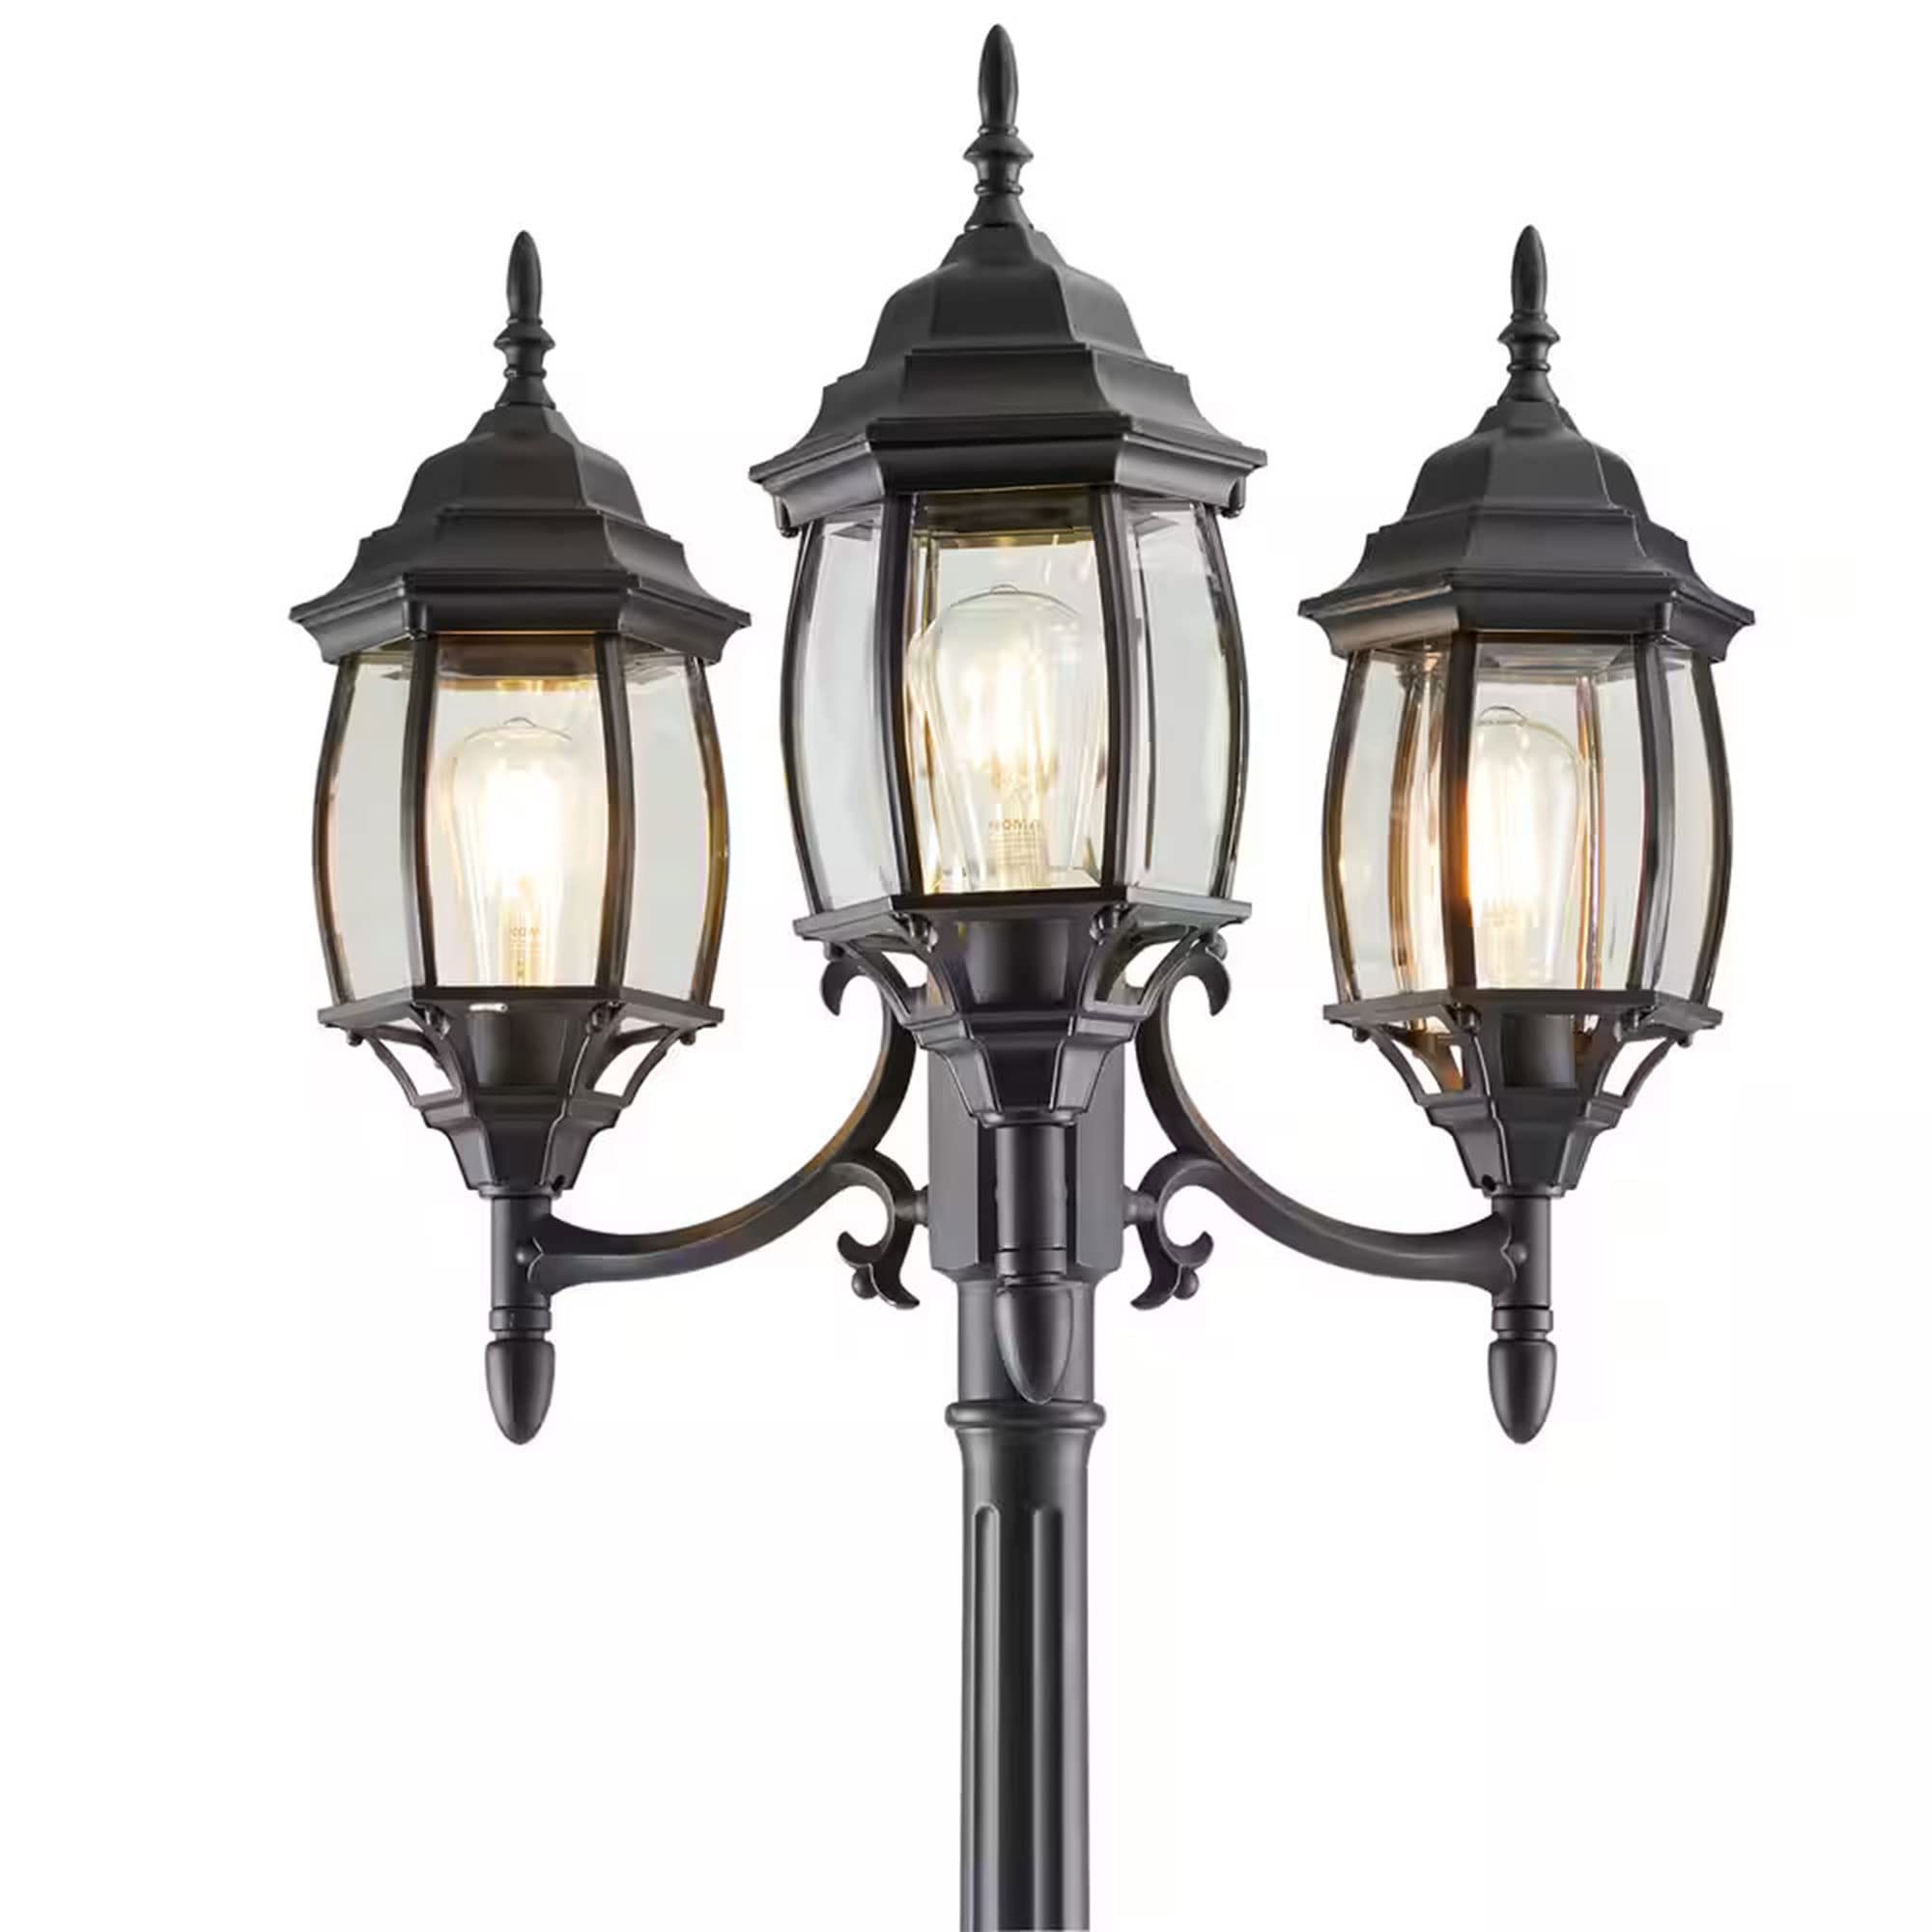 (6) BEAUTIFUL Outdoor Lamp Post Light with Triple-Head (Waterproof) 